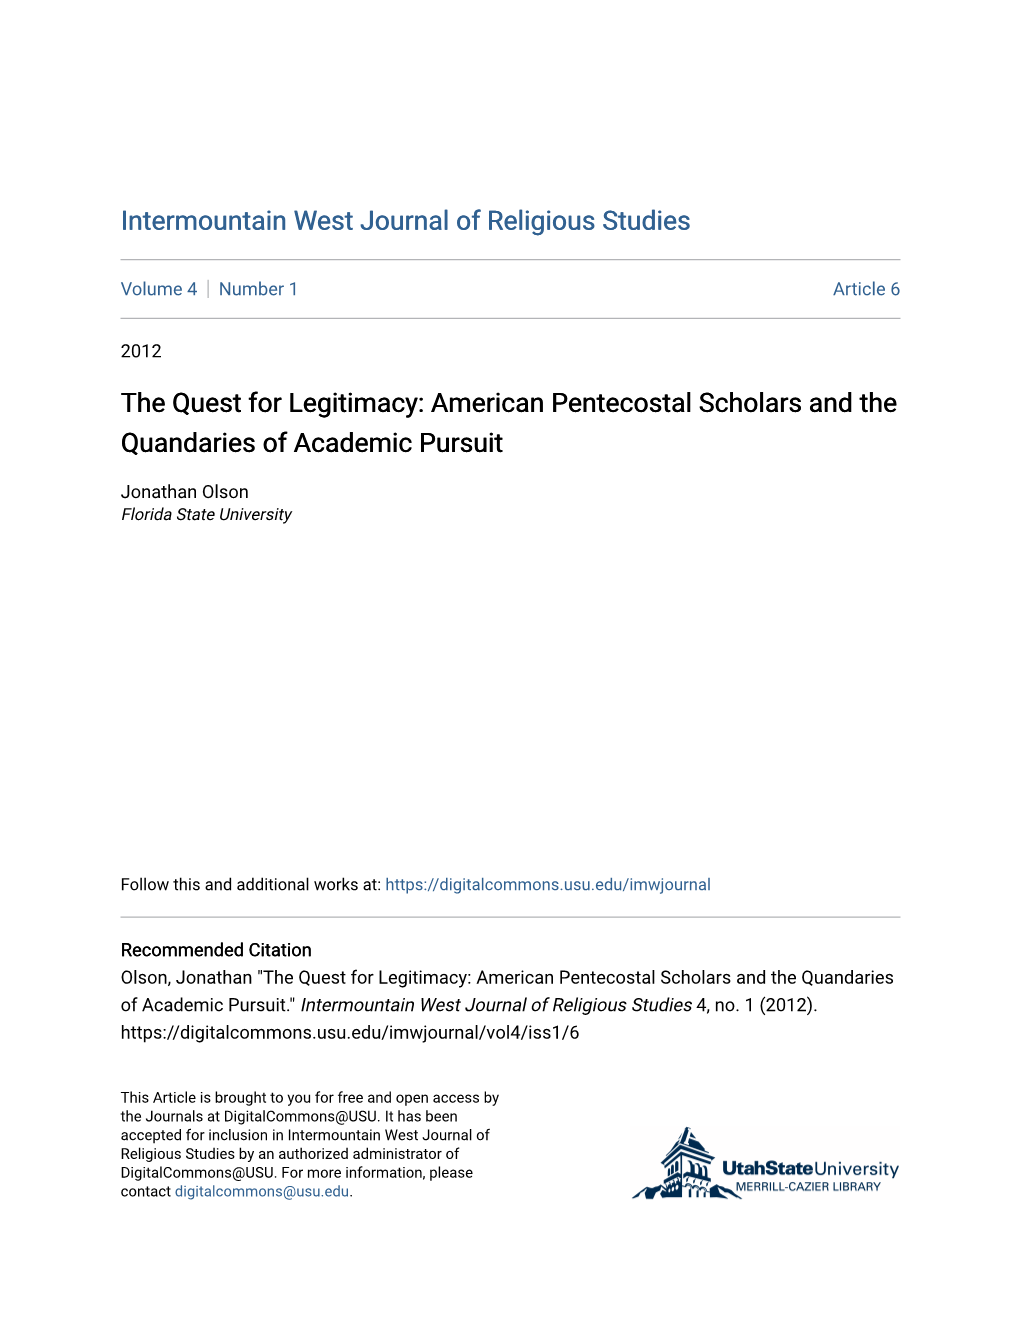 American Pentecostal Scholars and the Quandaries of Academic Pursuit